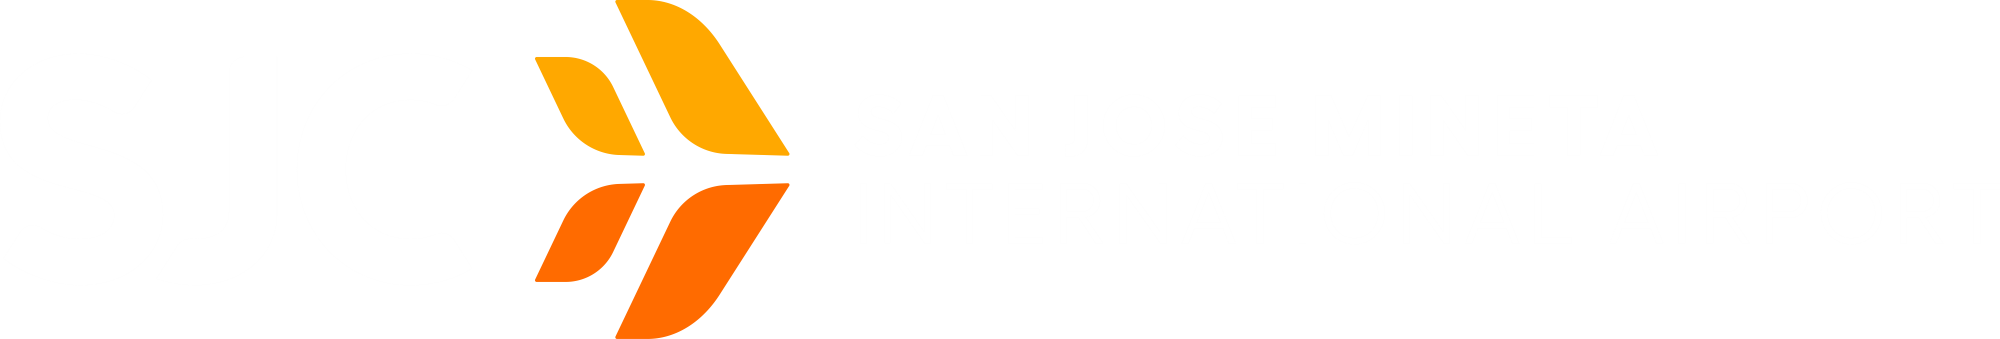 San Jose Airport White Logo